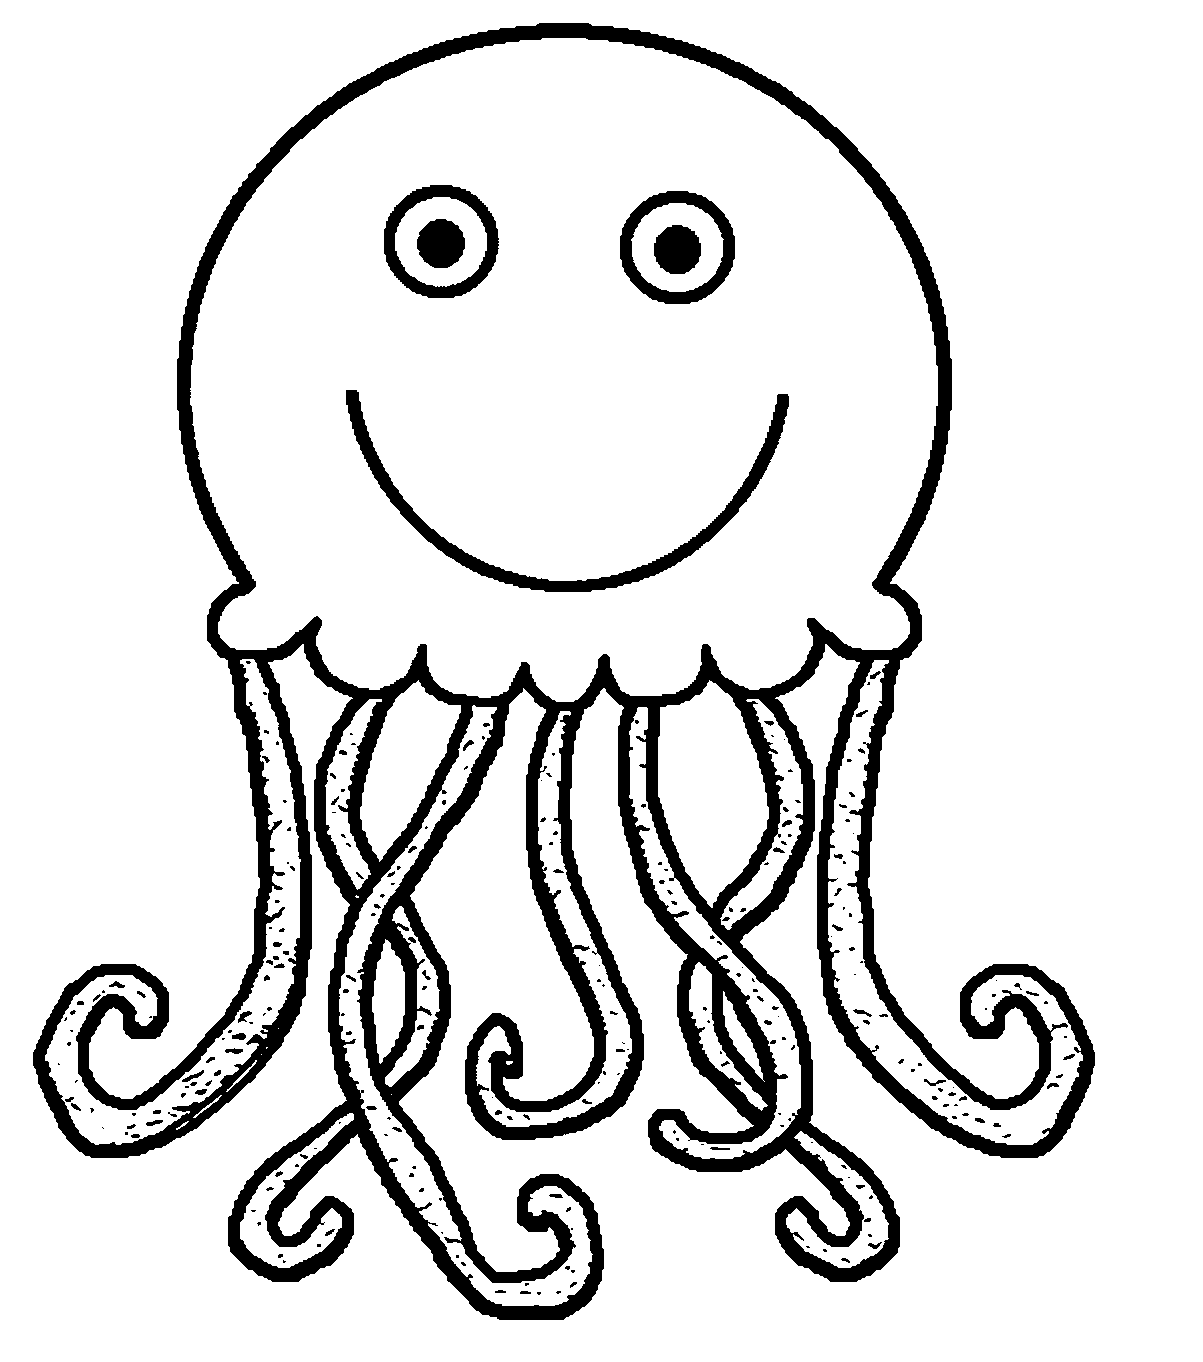 Jellyfish clipart jcxy